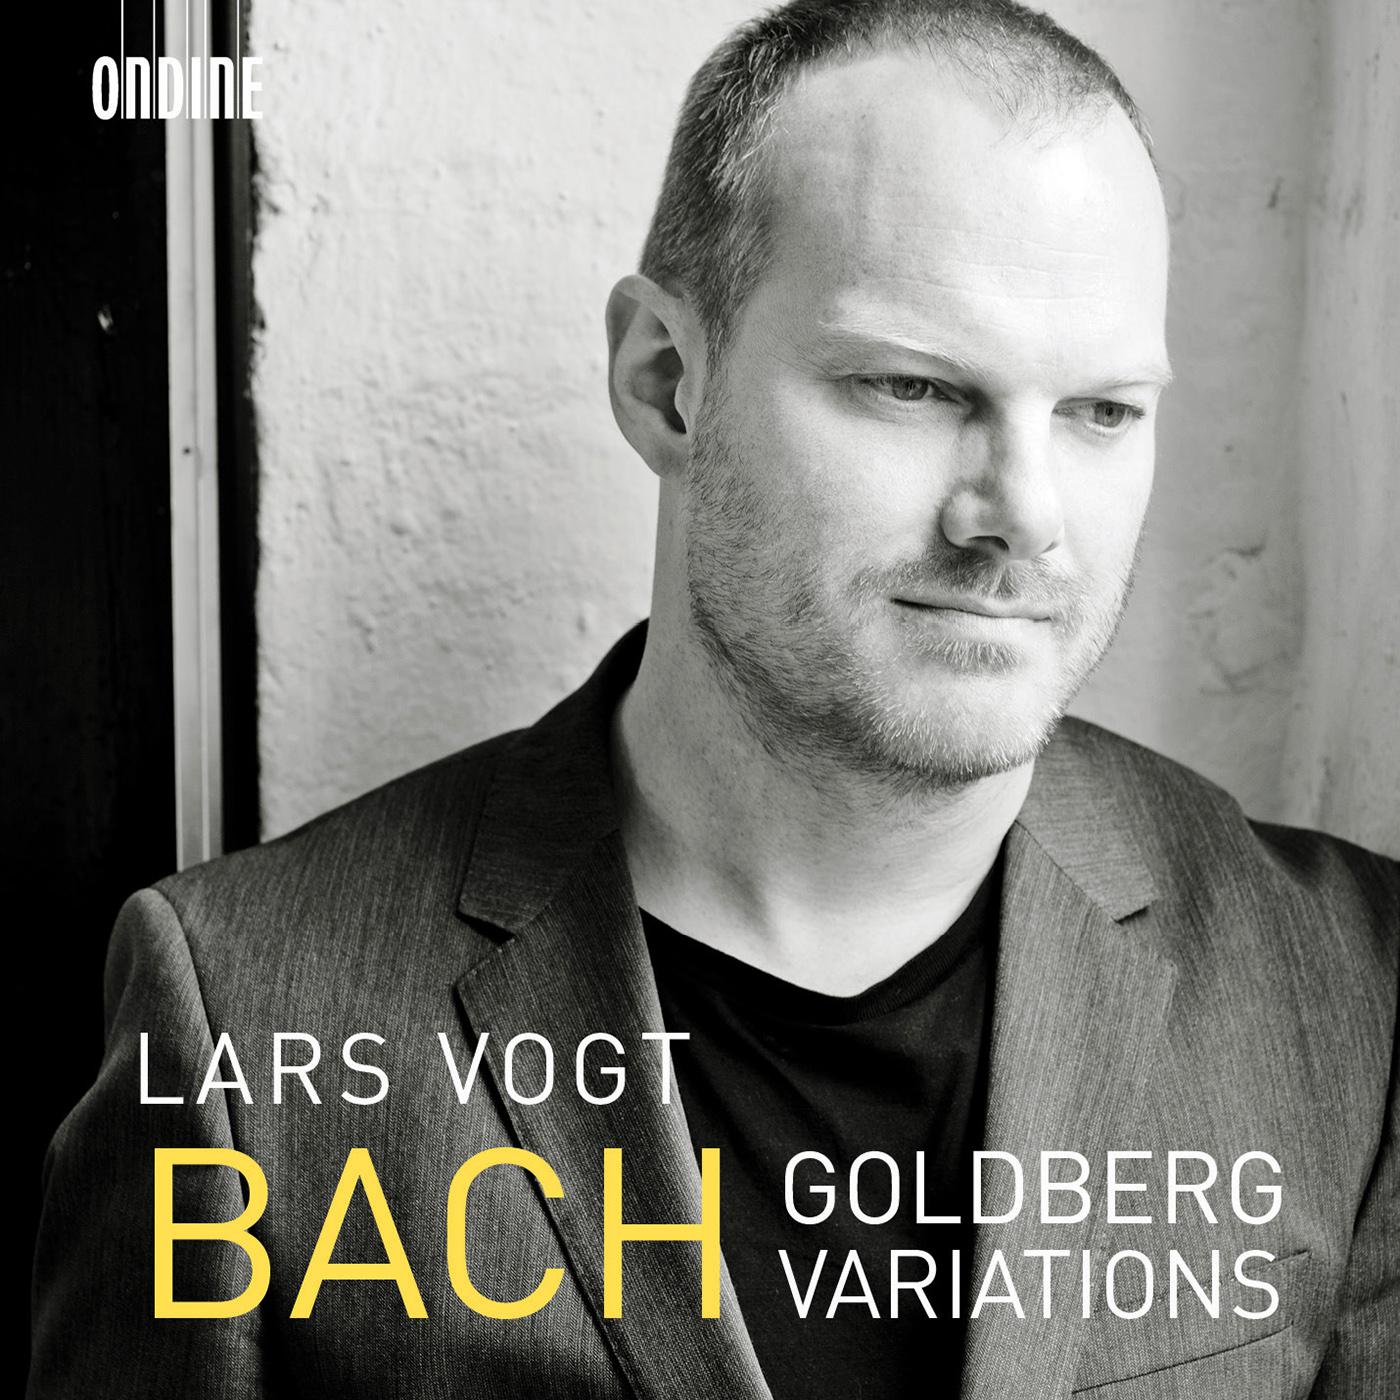 Goldberg Variations, BWV 988: Variatio 5. a 1 o vero 2 Clav.